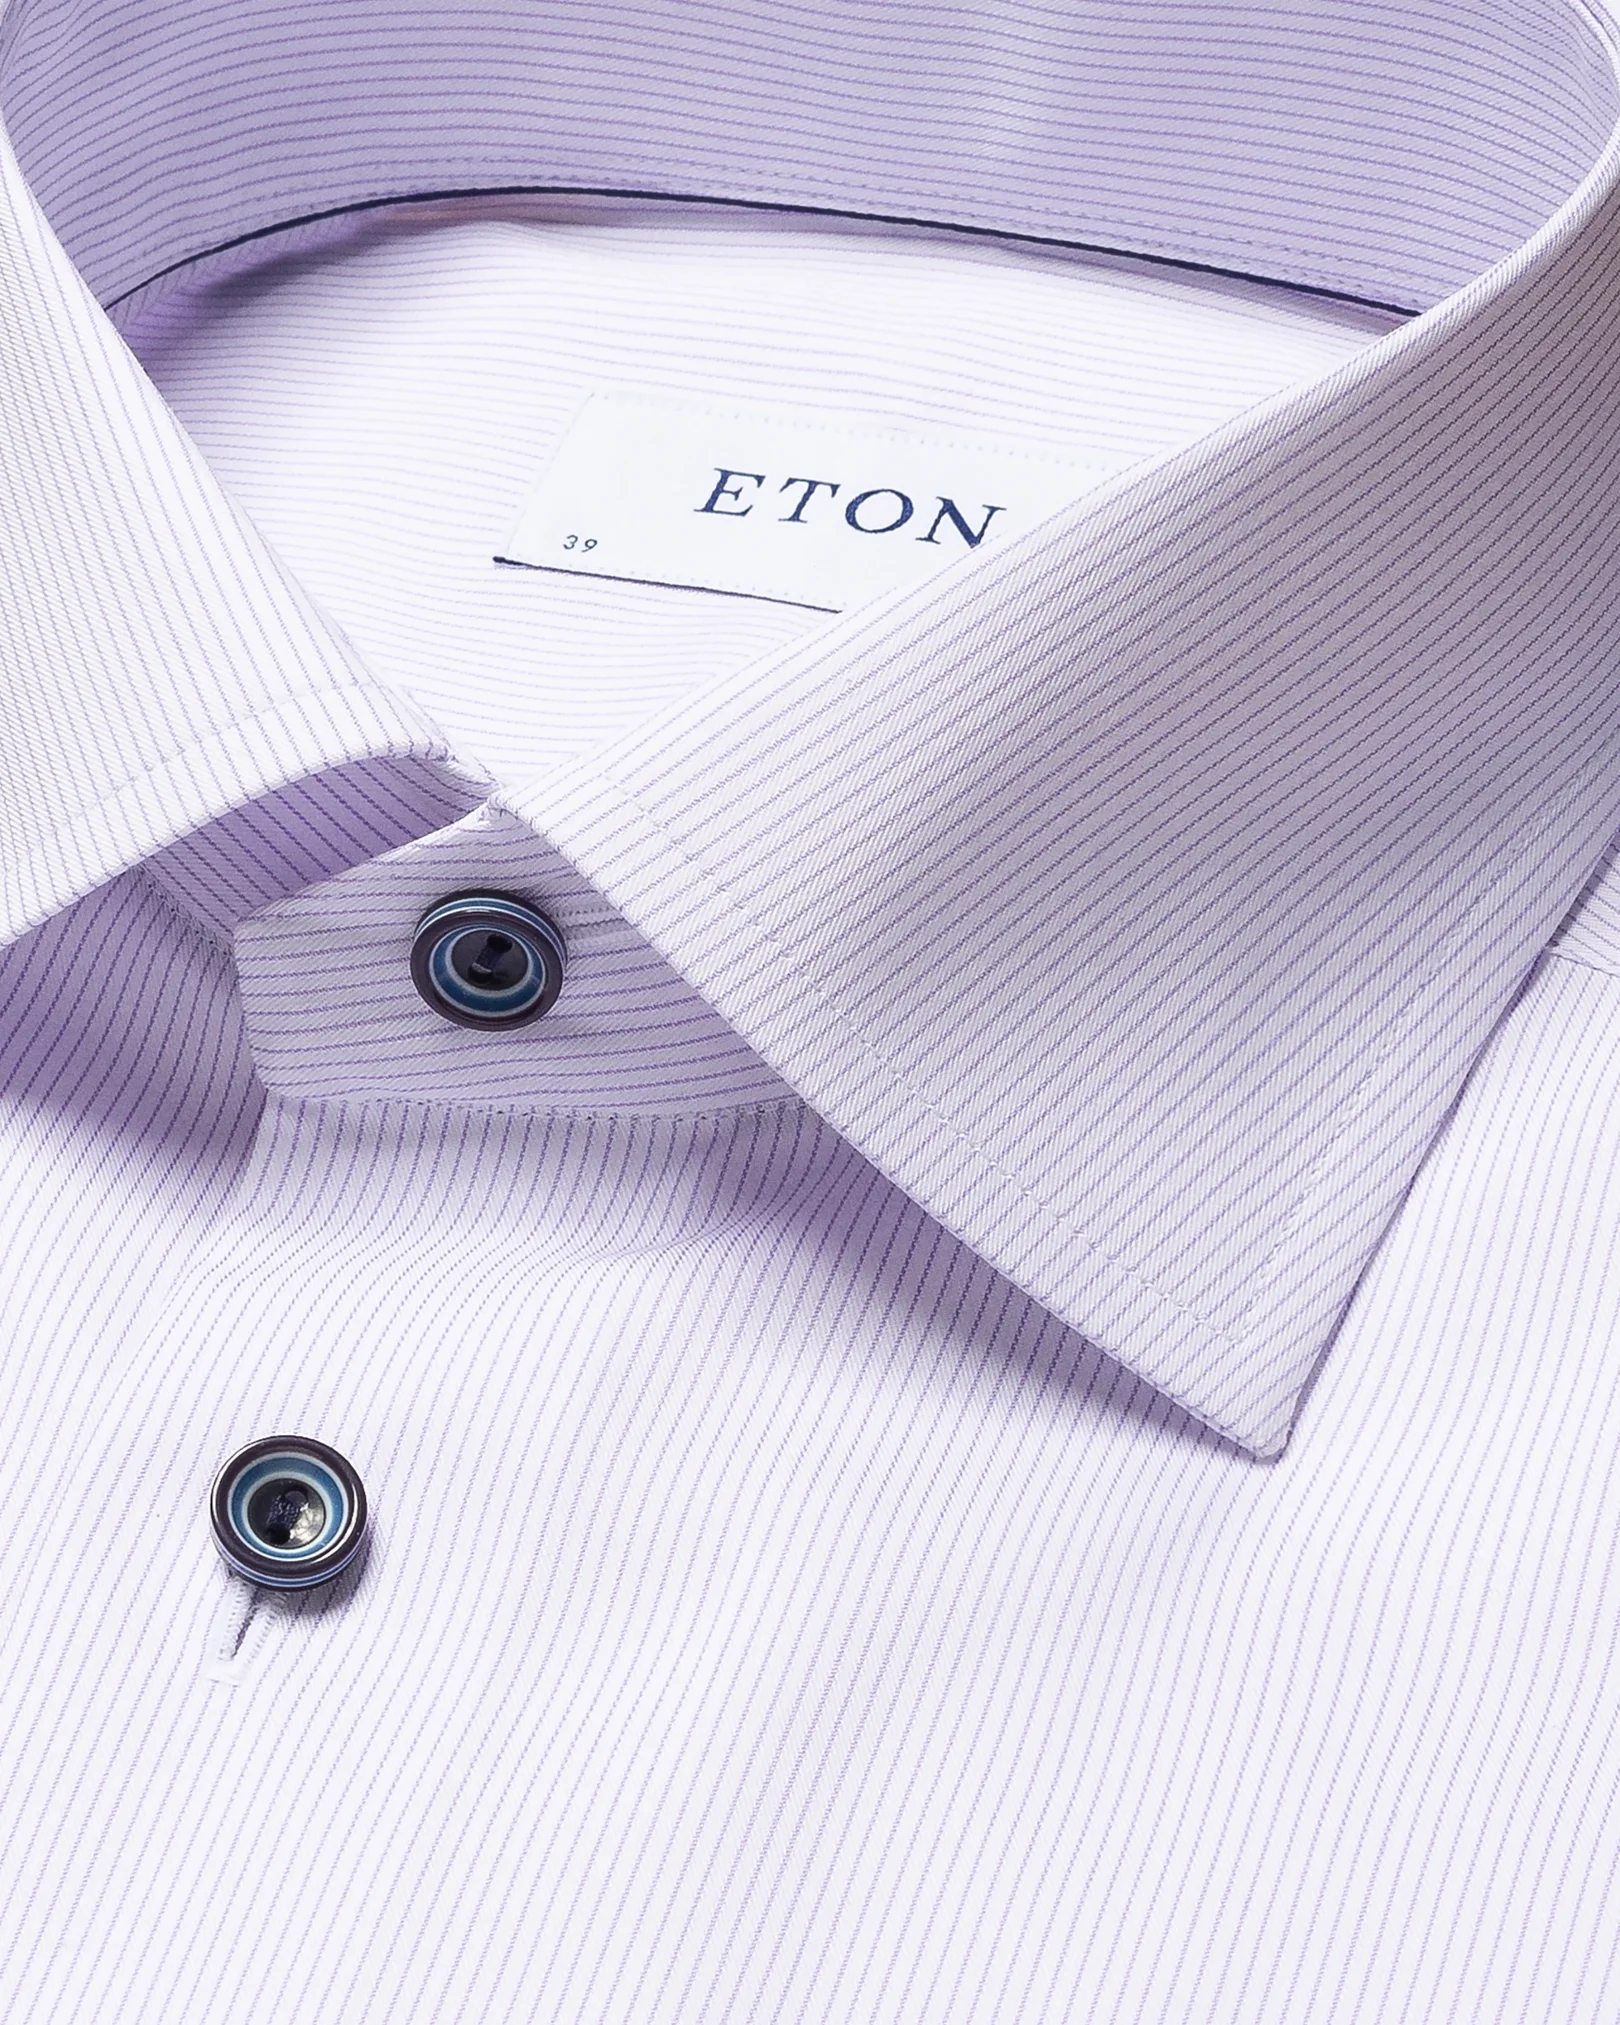 Eton - light purple twill